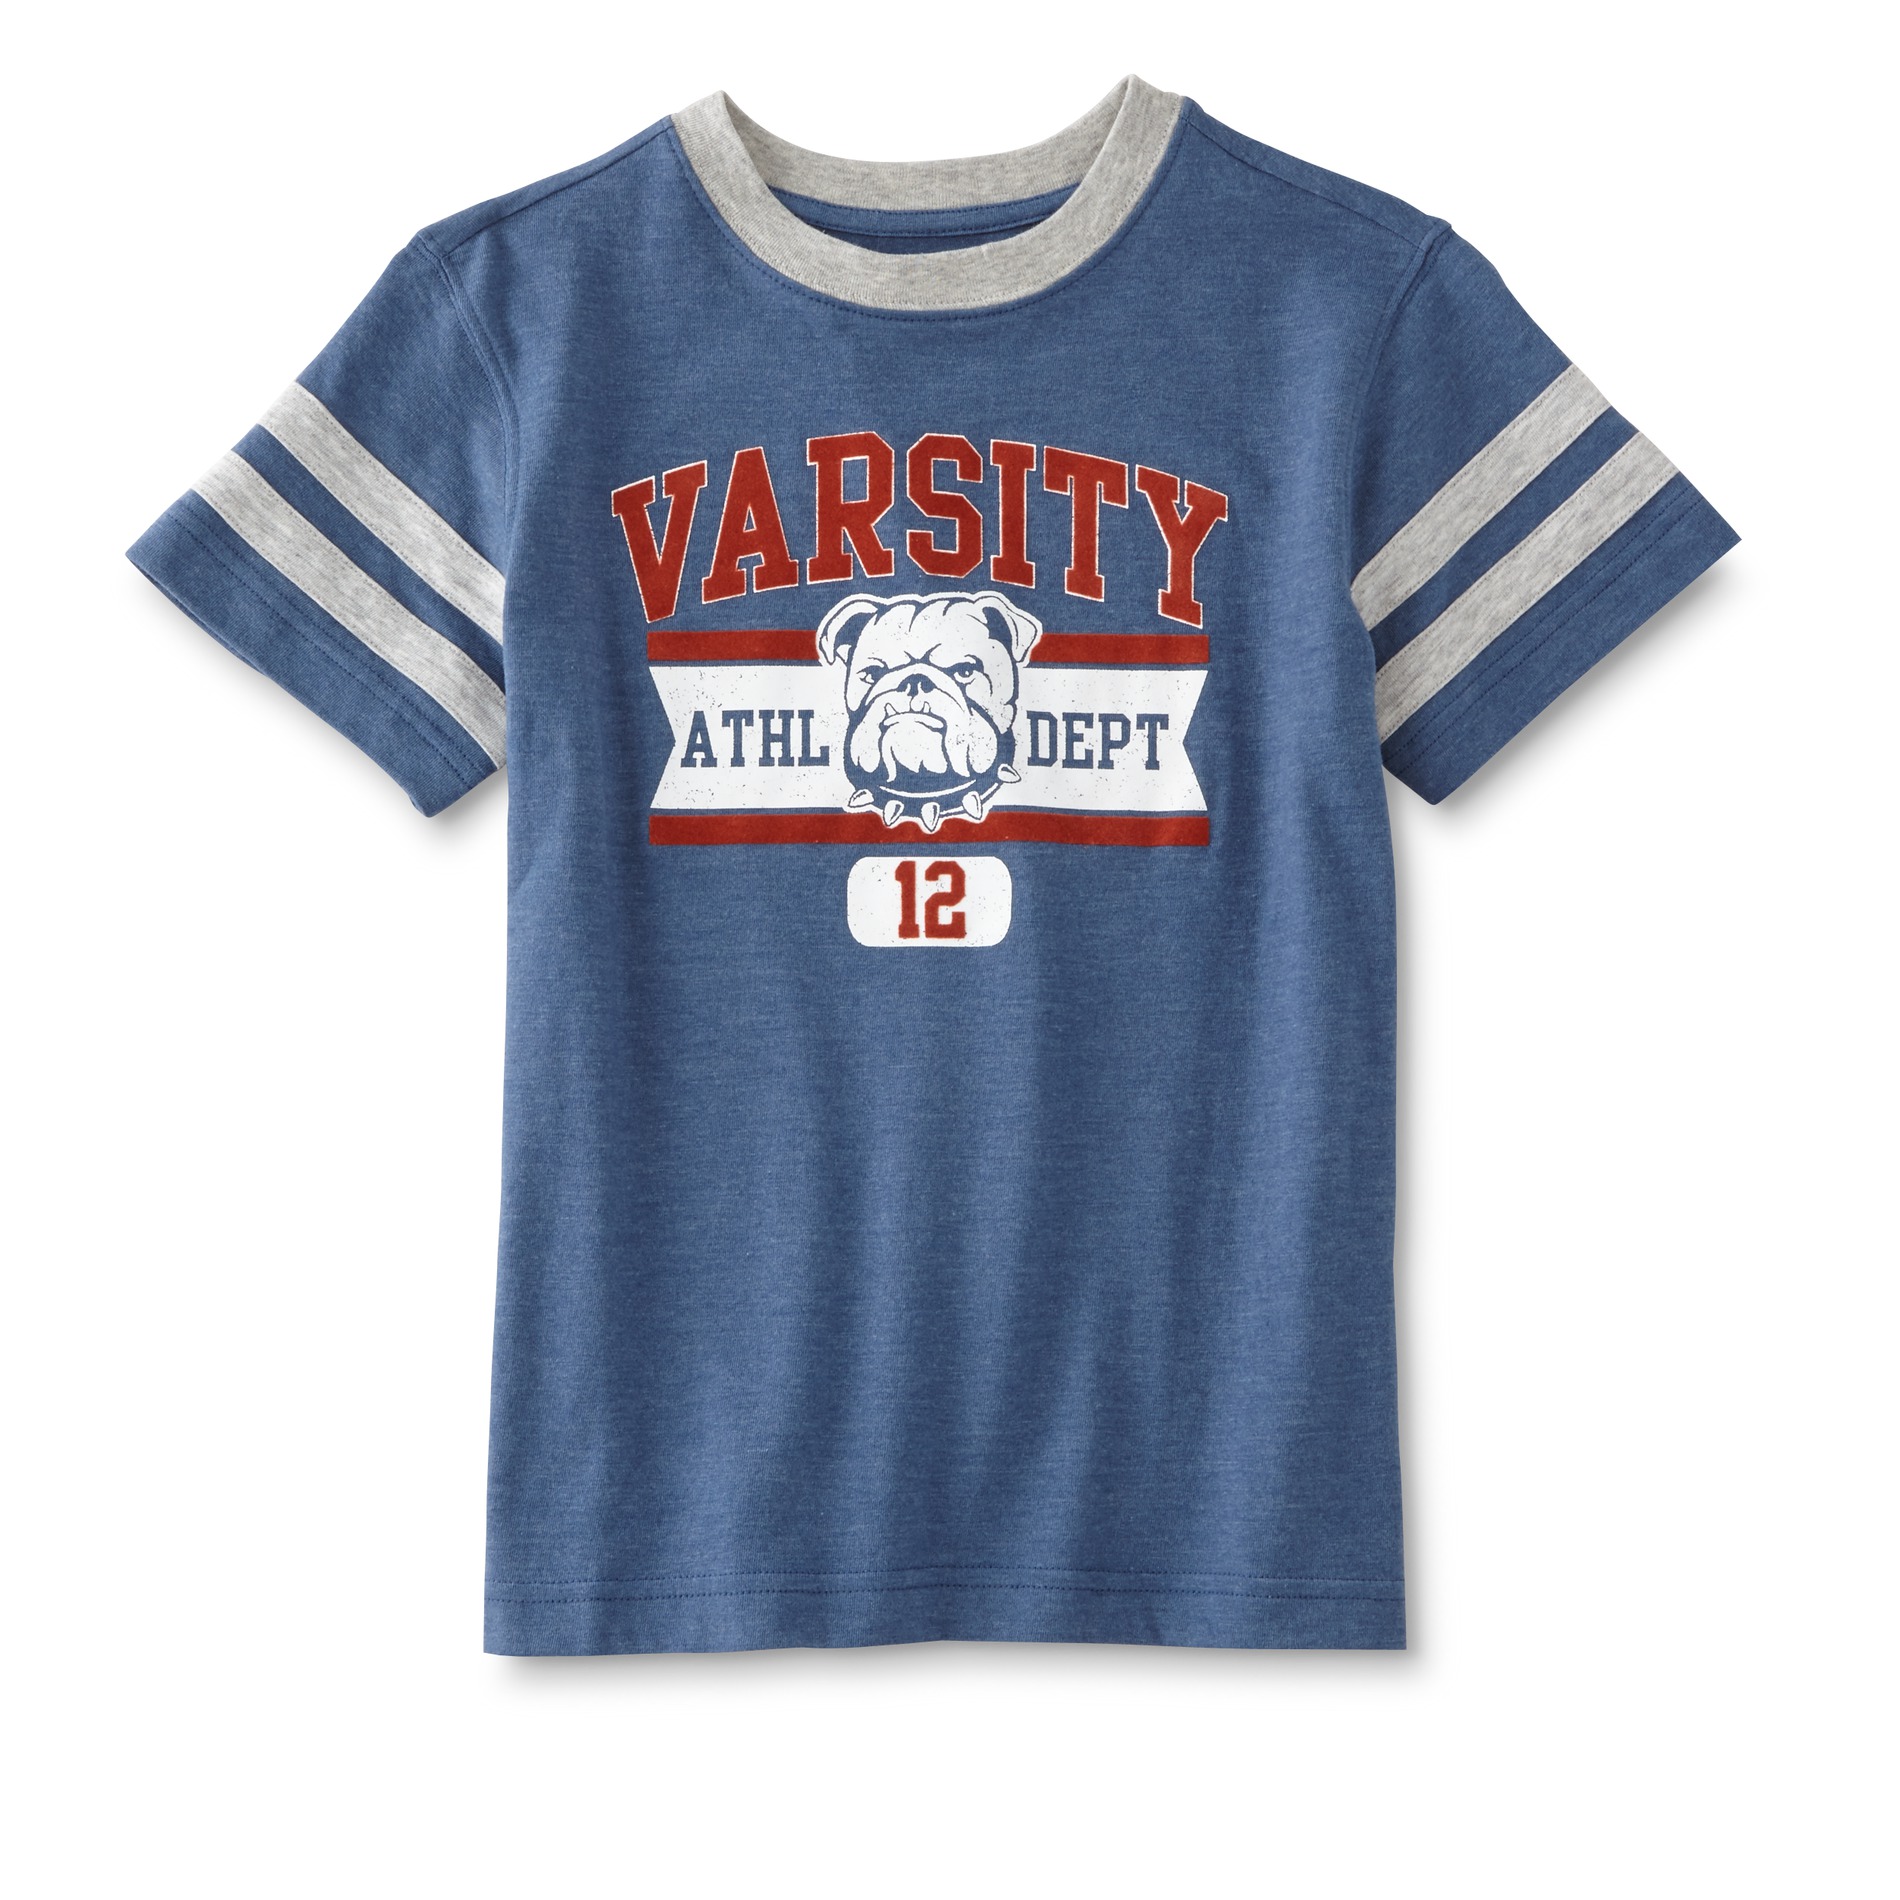 Roebuck & Co. Boys' Graphic T-Shirt - Varsity Athl Dept